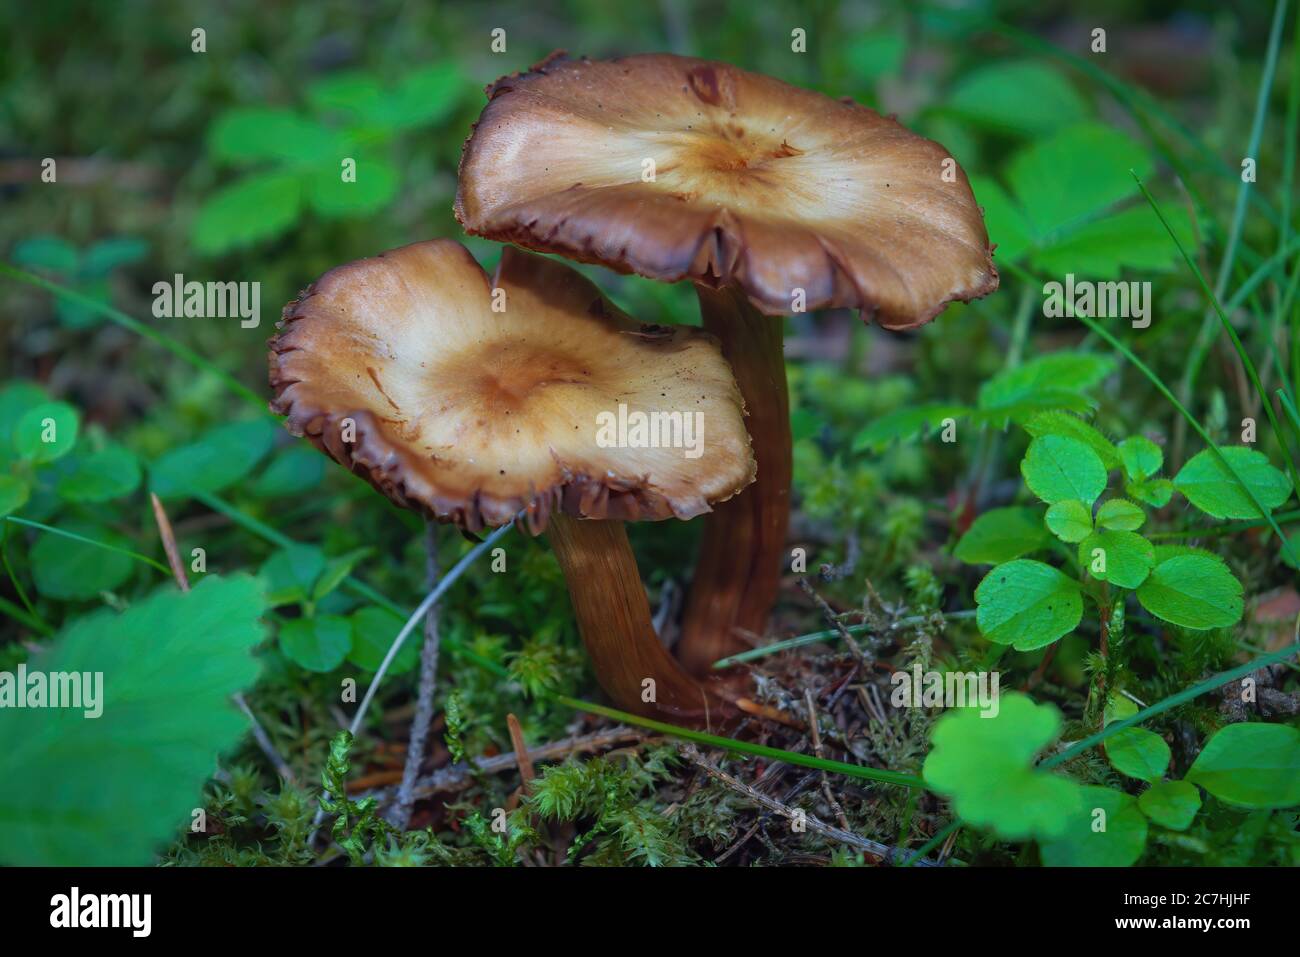 Psathyrella piluliformis, known as Common Stump Brittlestem mushroom, growing in the forest close-up. Stock Photo